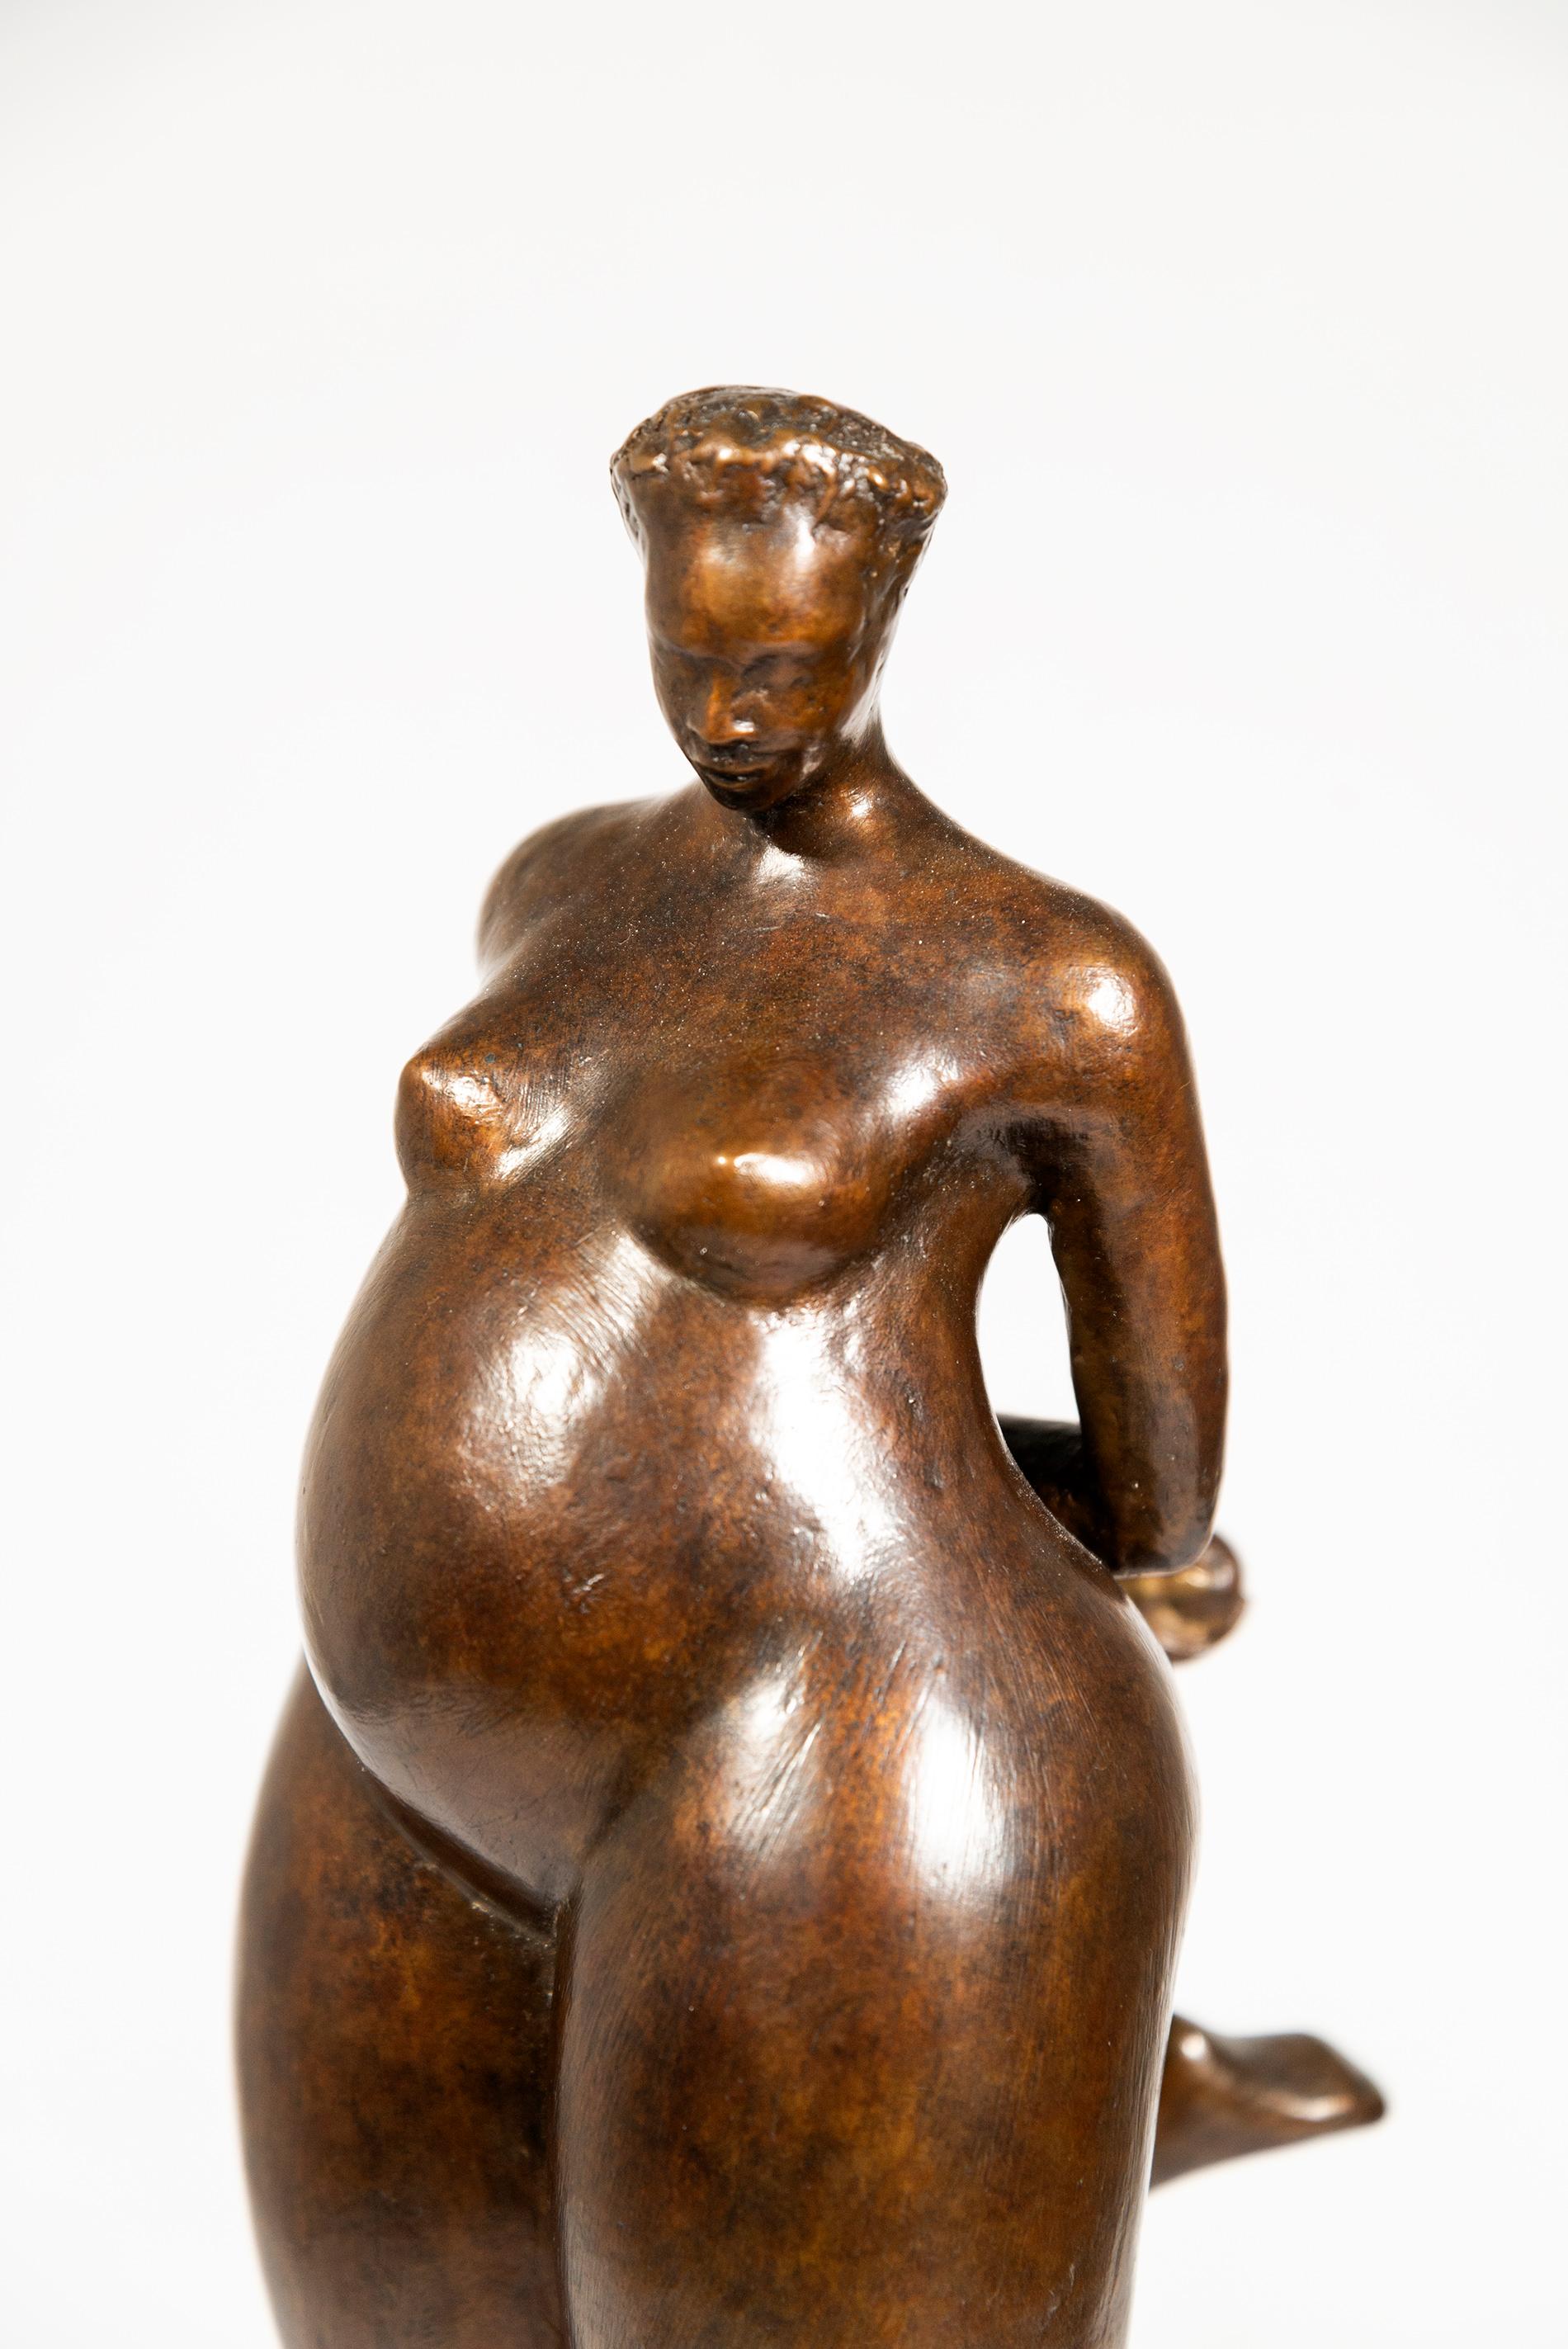 Zaliatou 3/8 - female, figurative, nude, expressive, modern, bronze sculpture For Sale 3